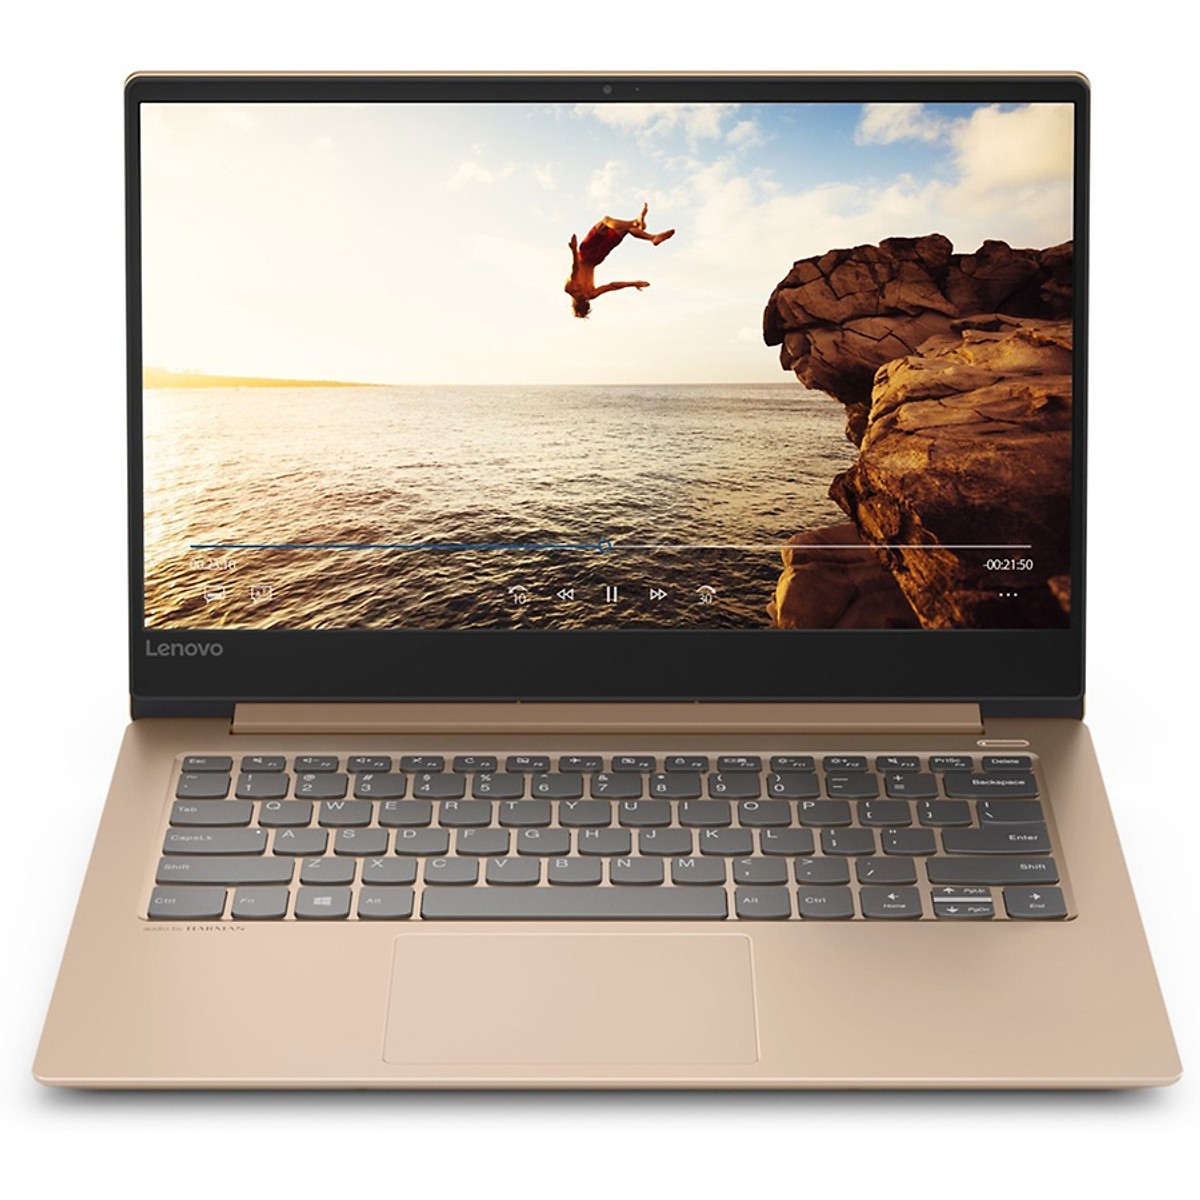 Laptop Lenovo IDEA PAD 520-5 14IKBR